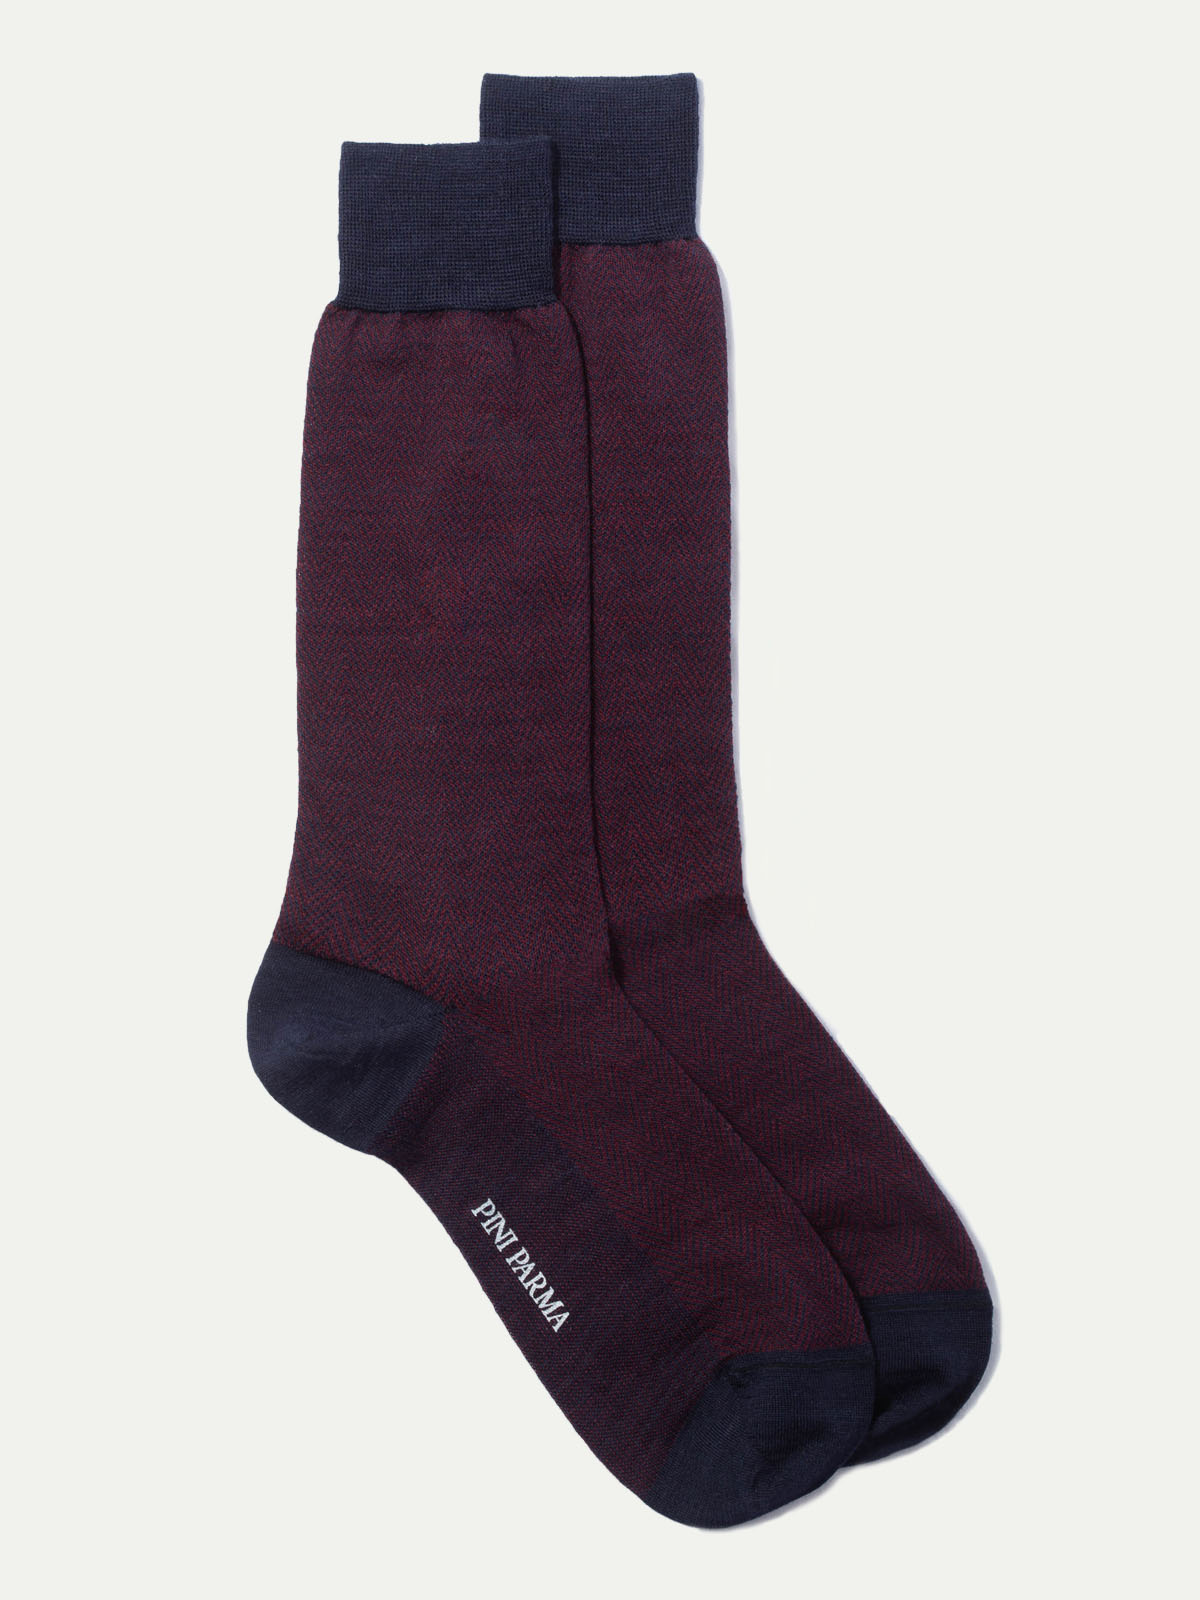 Bordeaux herringbone short socks - Made in Italy